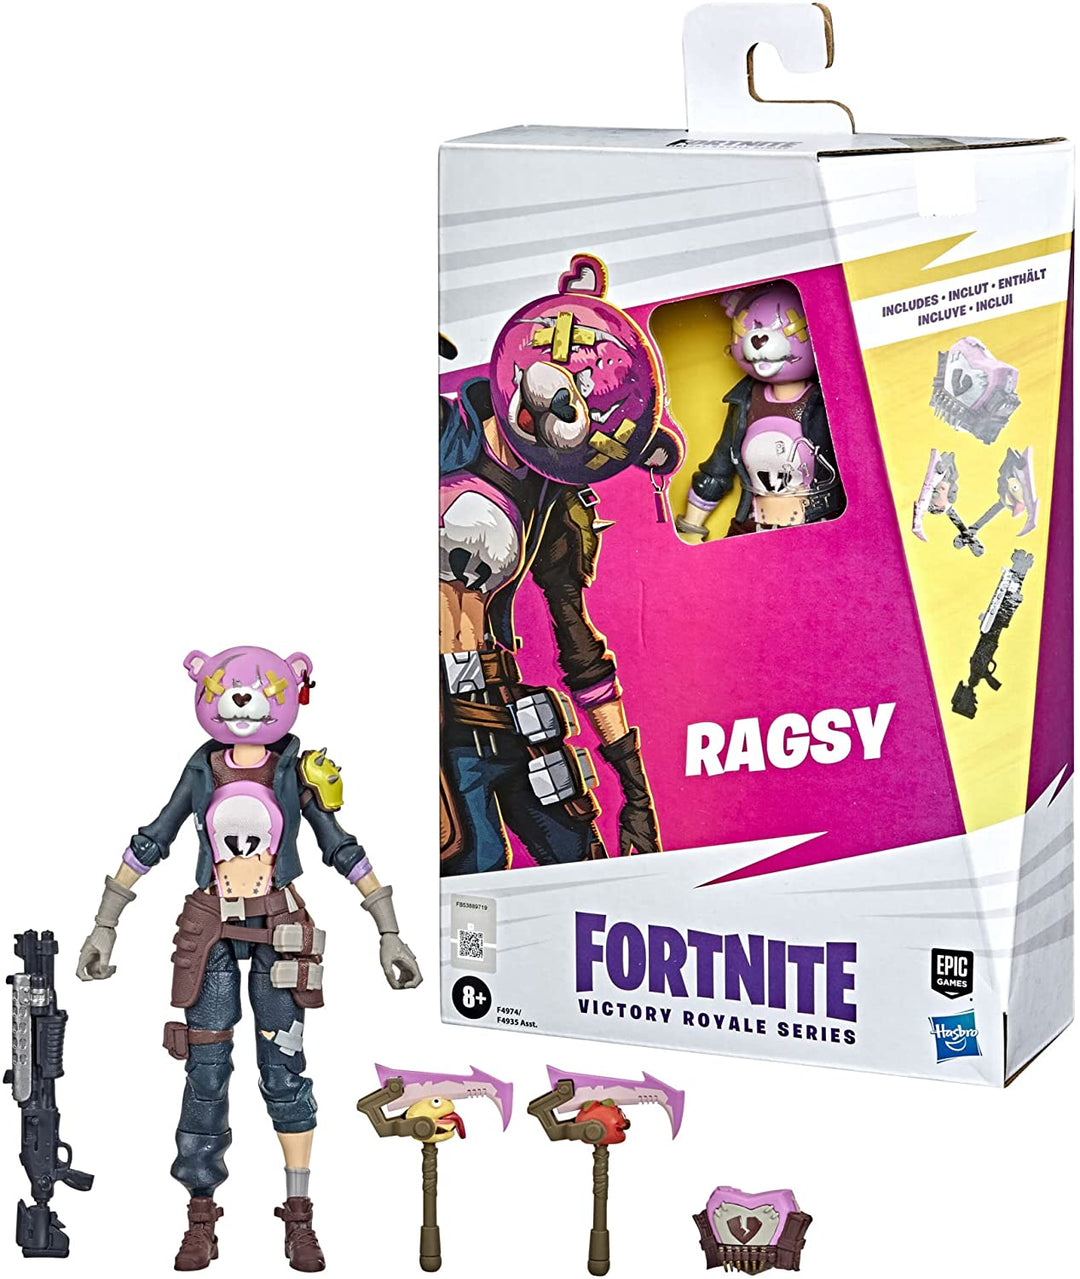 Hasbro Fortnite Victory Royale Series Ragsy Sammel-Actionfigur mit Zubehör